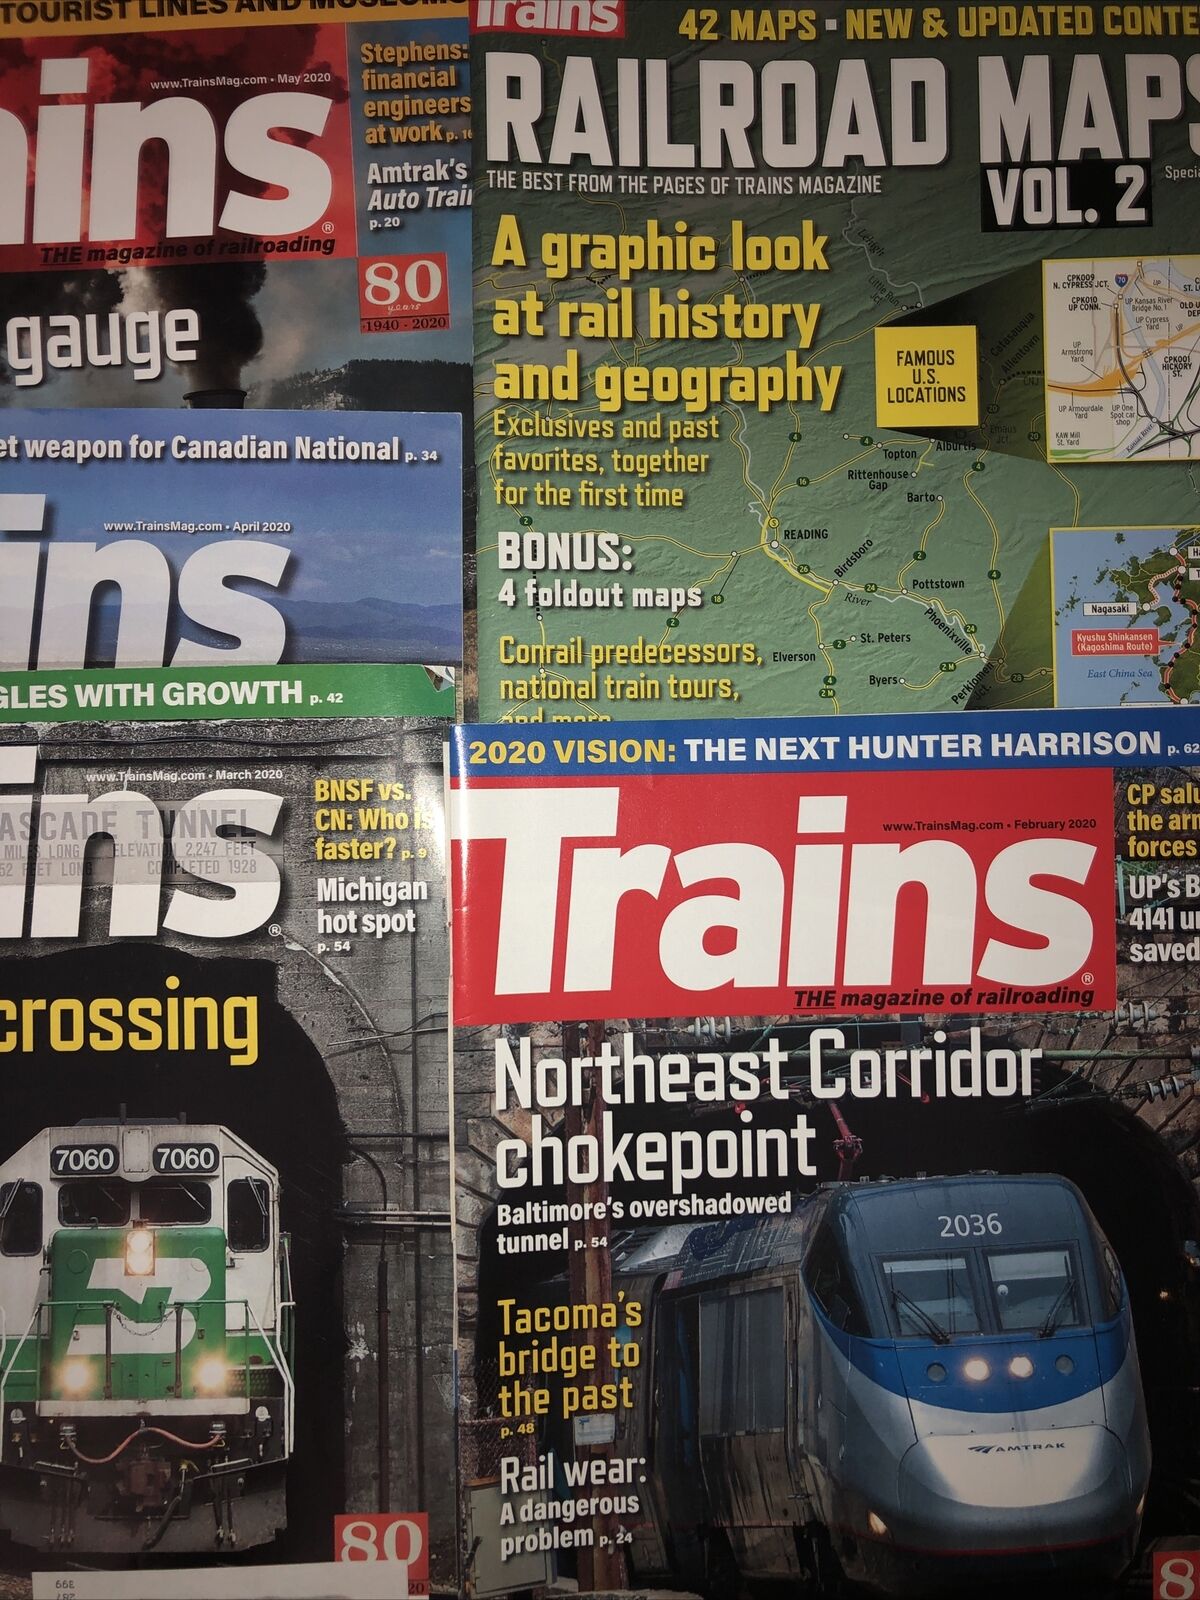 Trains Magazine 2020 5 Editions Jan Feb Mar April Railroad Maps Vol 2